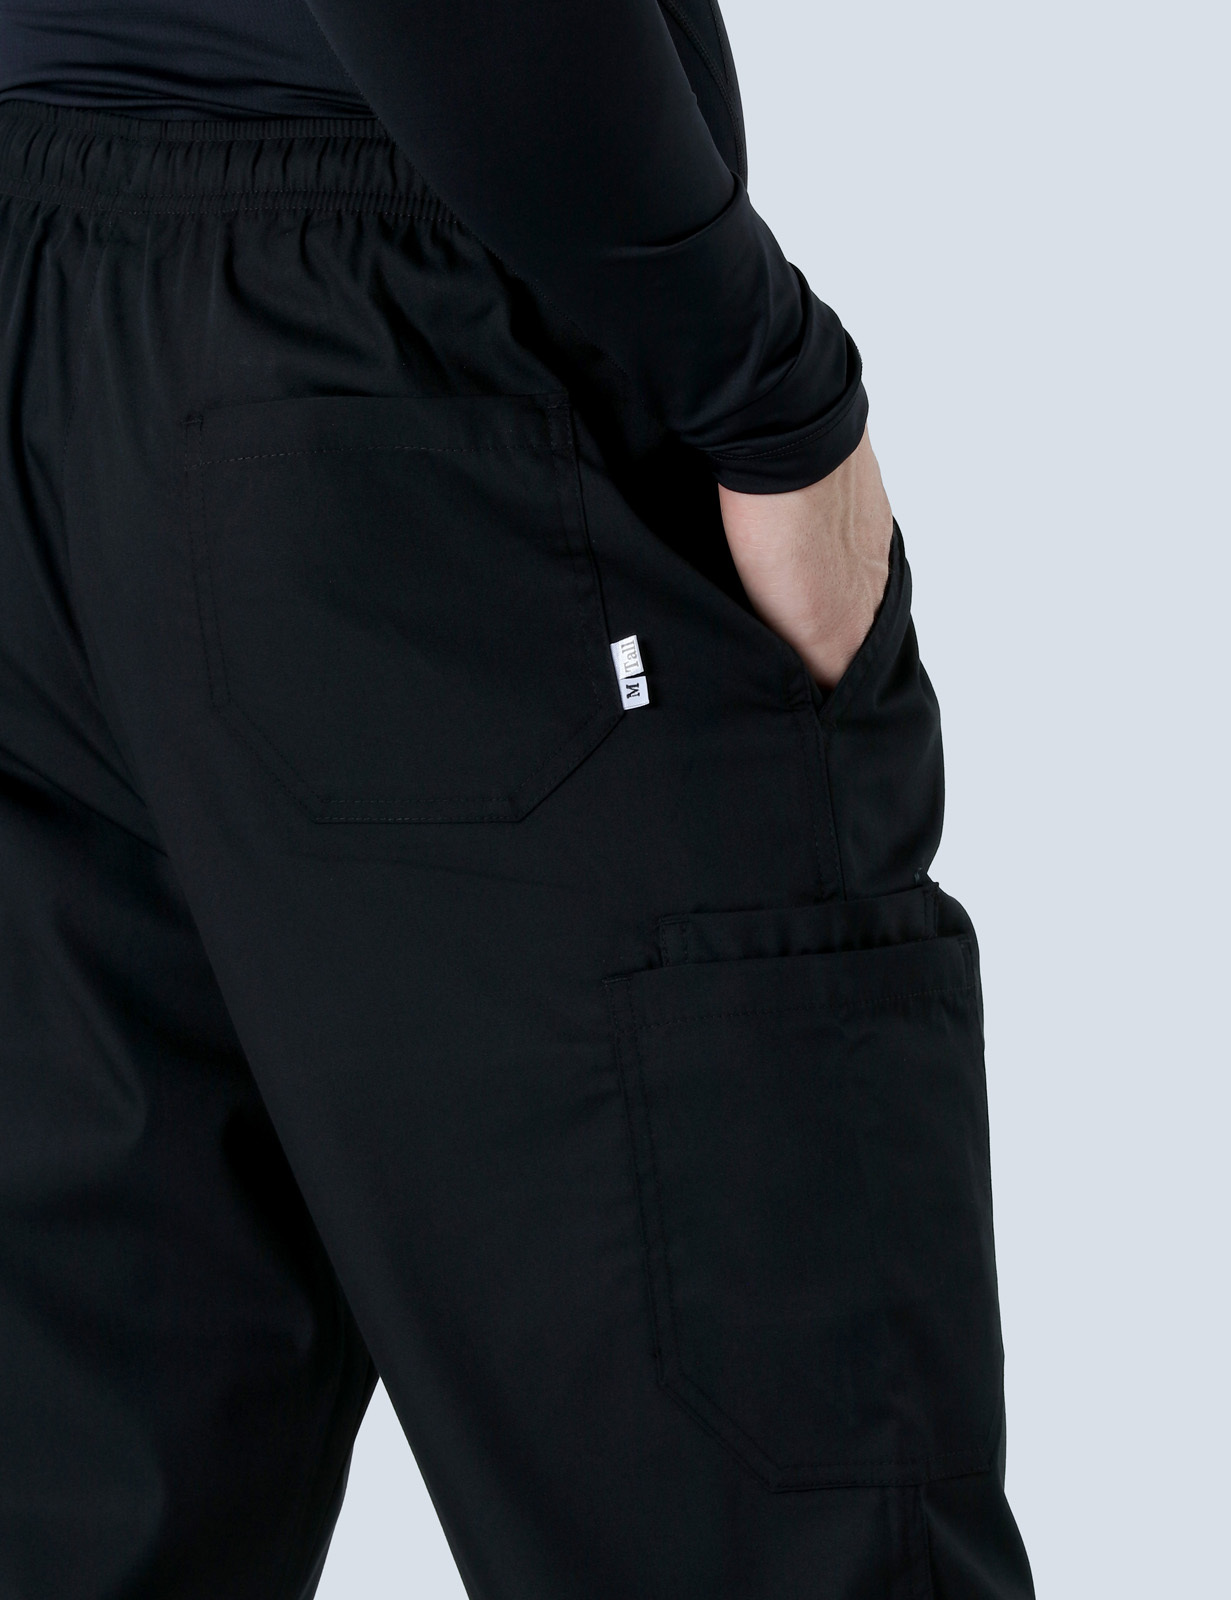 Men's Cargo Performance Pants - Black - 3X Large - 3